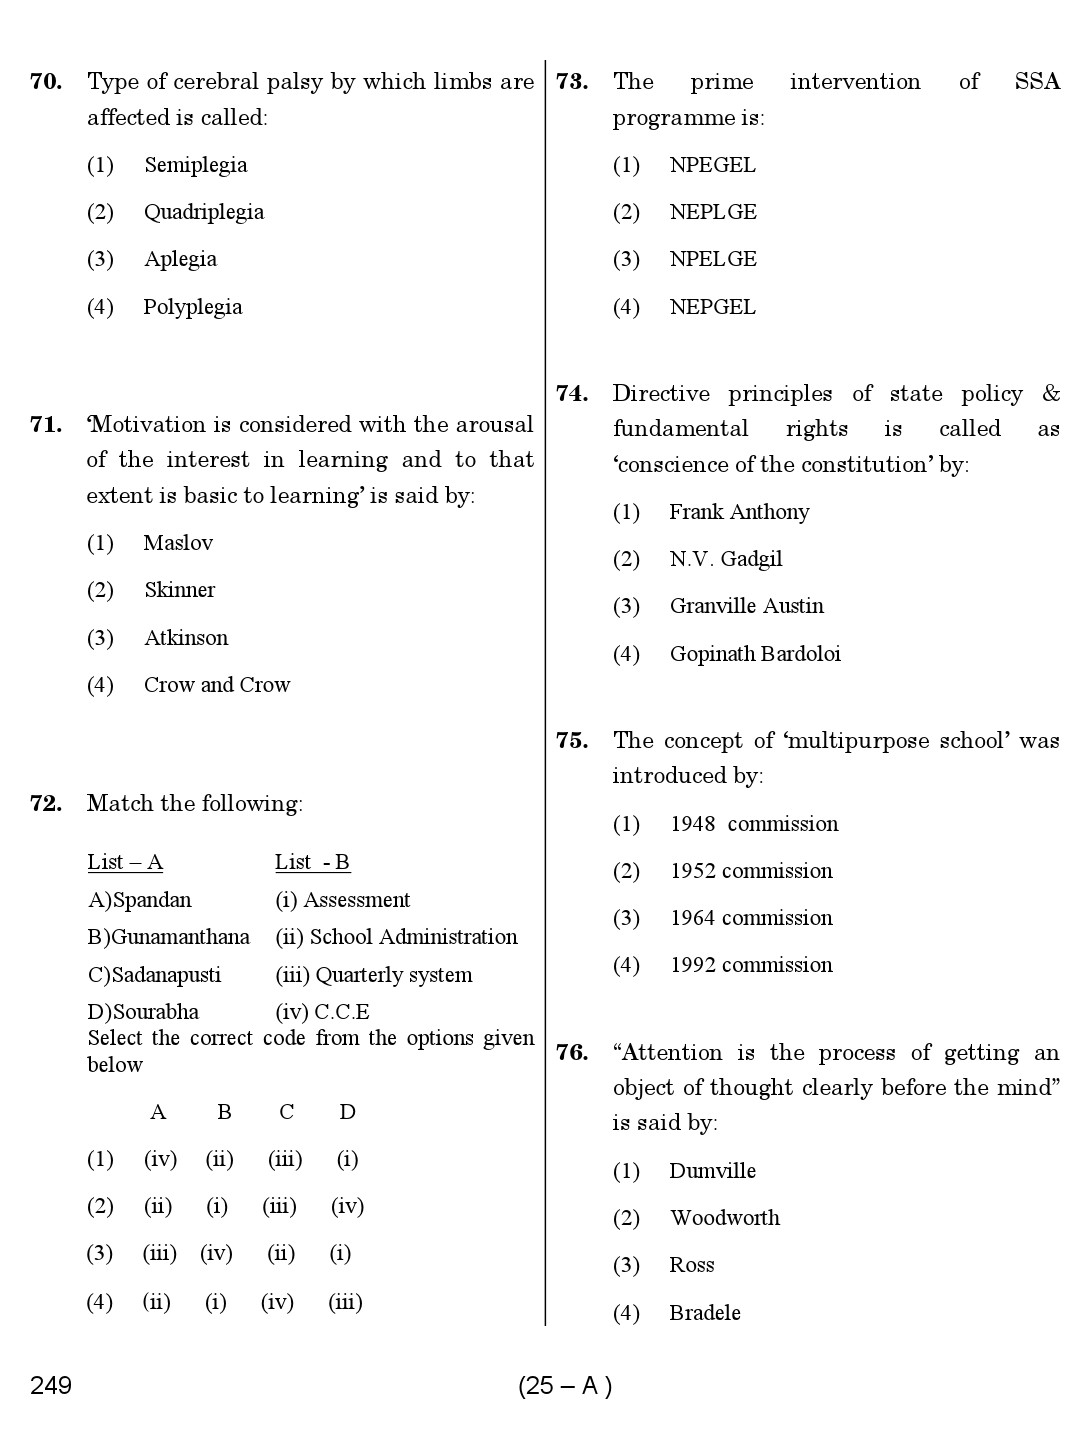 Karnataka PSC Principal Exam Sample Question Paper Subject code 249 25